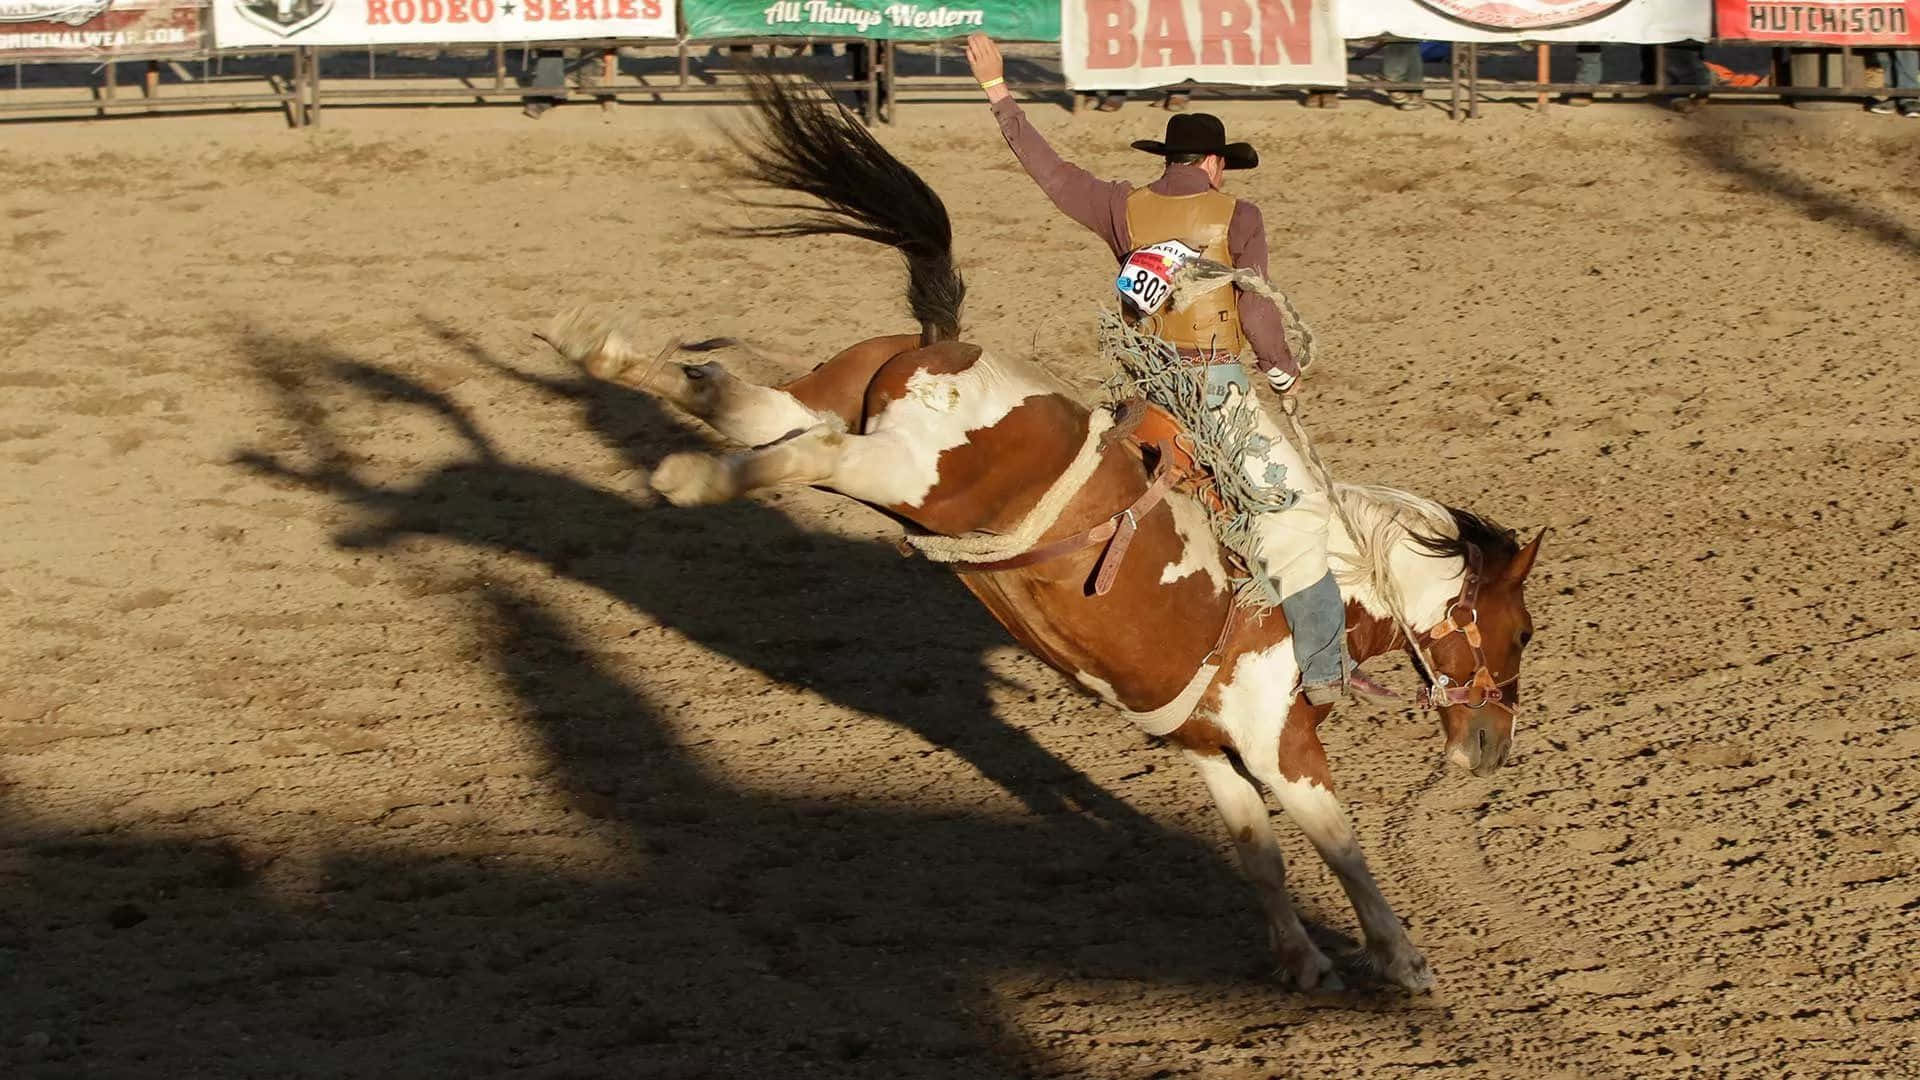 Cowboy rider bronco under rodeo show. Wallpaper